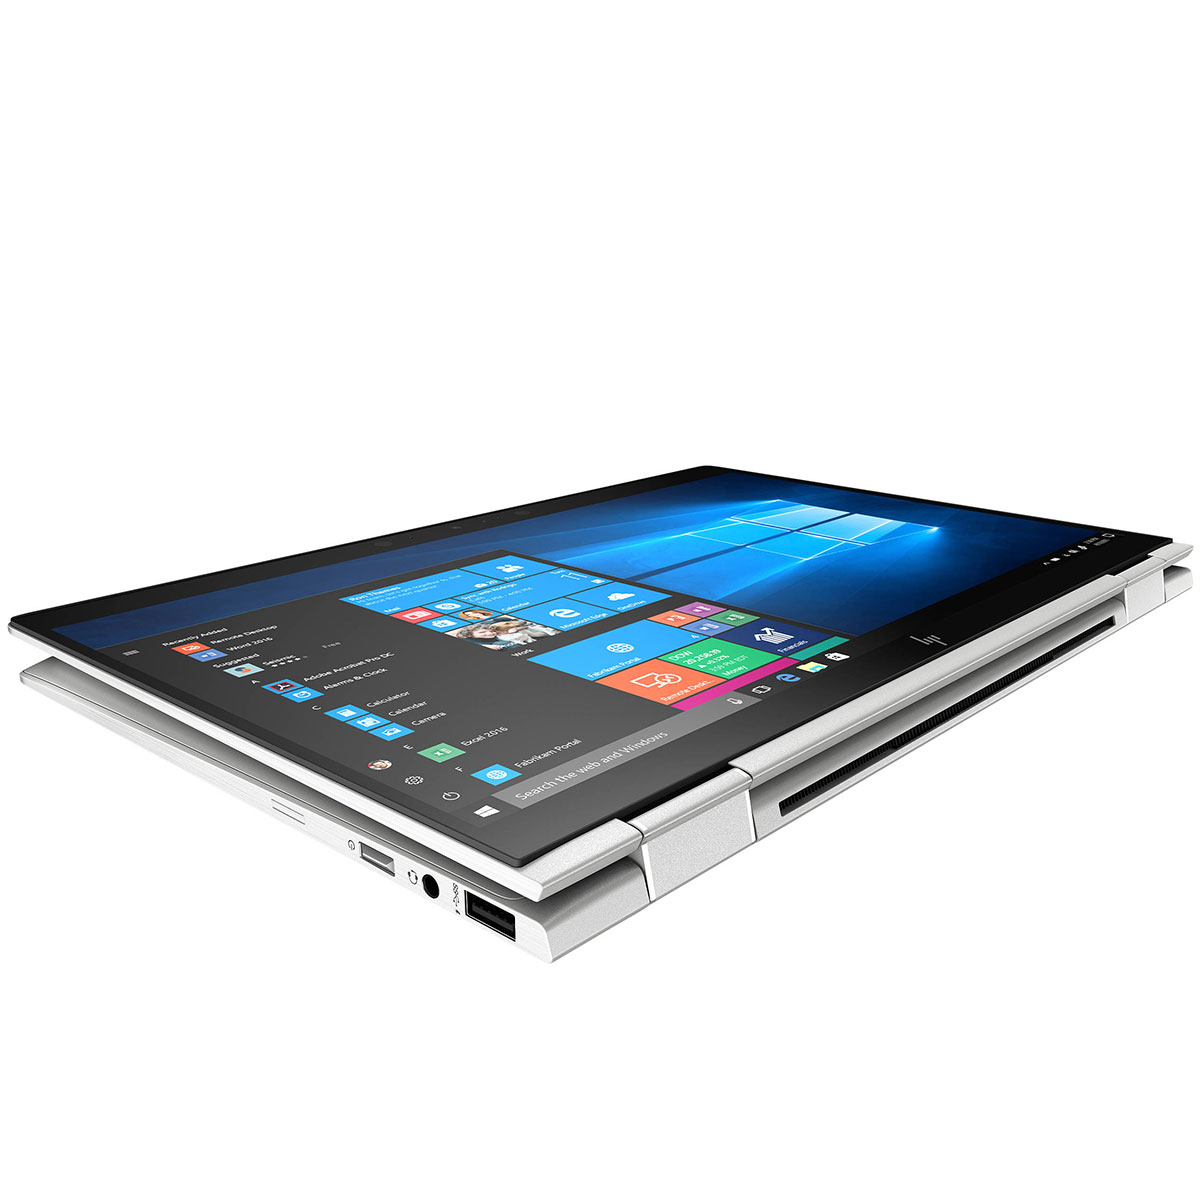 HP EliteBook x360 1030 G4: 13.3" FHD Touch, 8th Gen i7 vPro, 8GB RAM, 256GB SSD